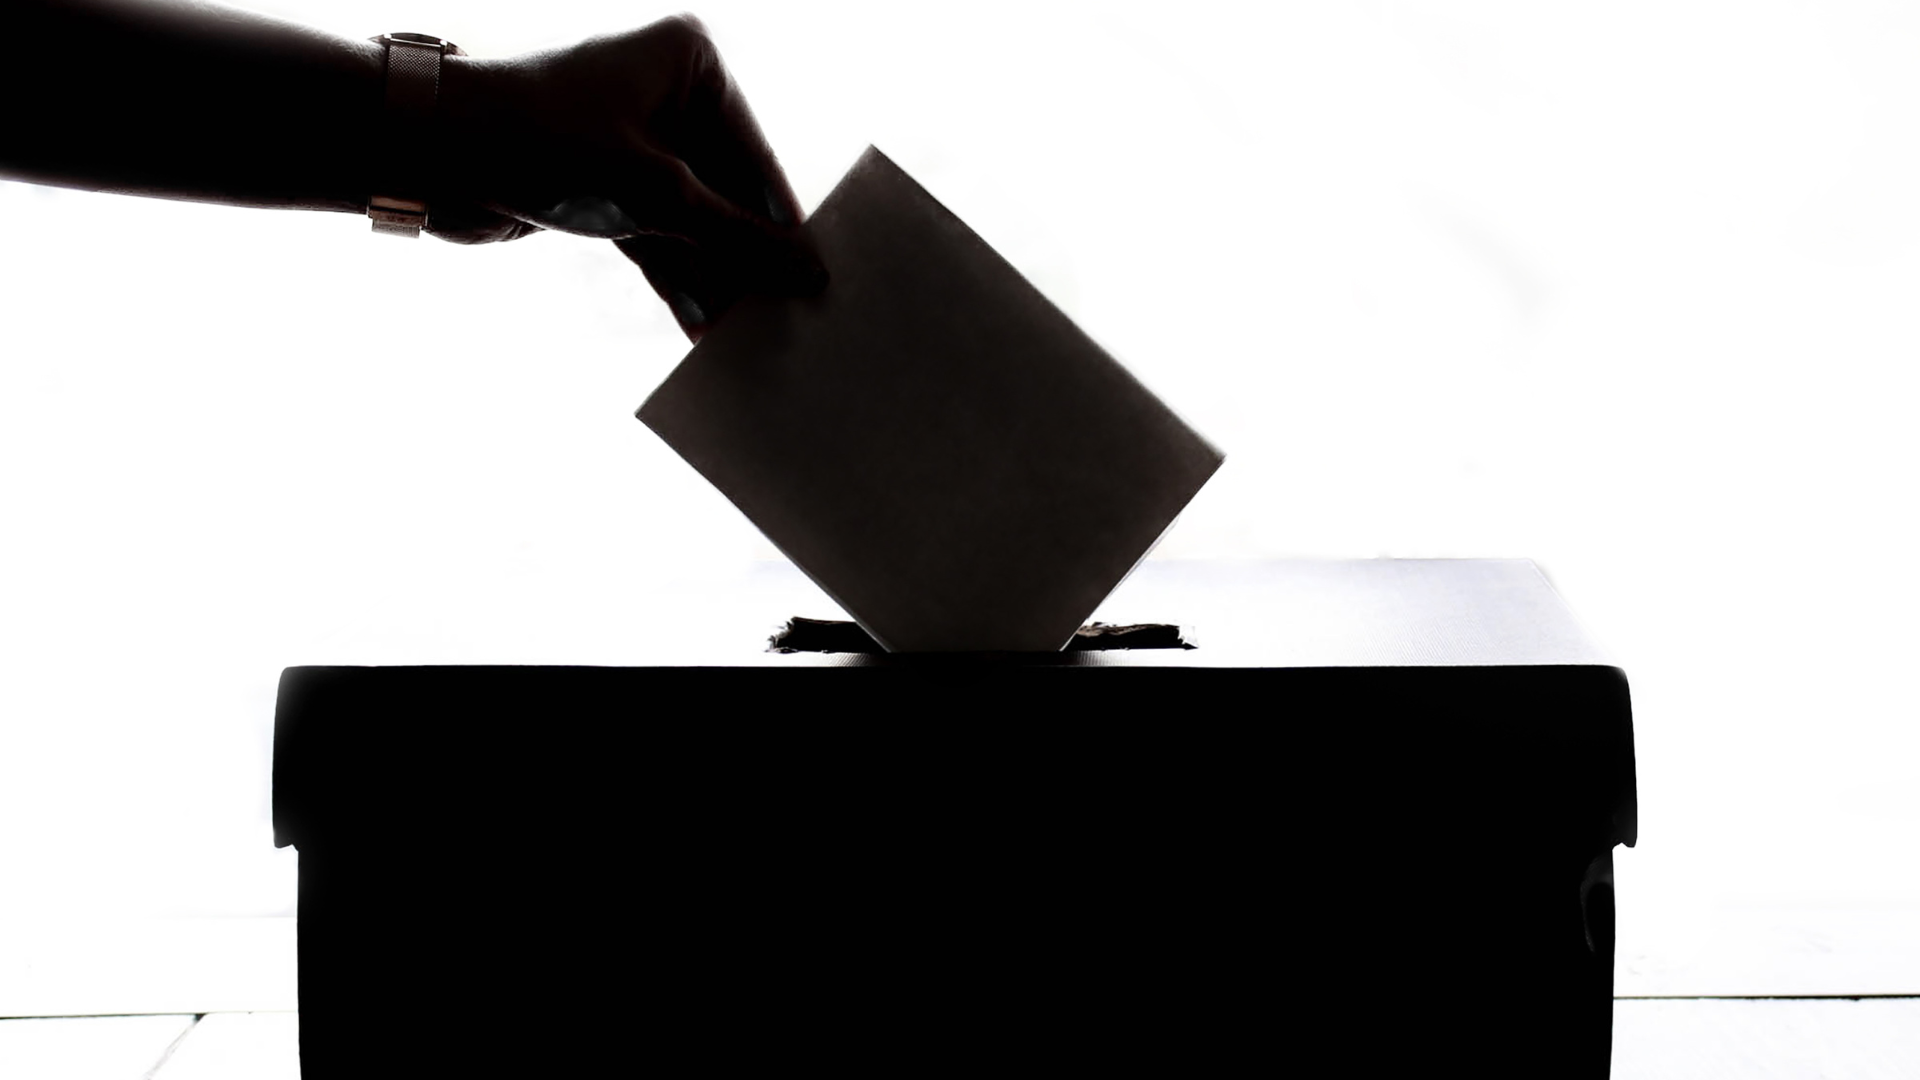 Silueta d'una mà dipositant un vot a una urna.